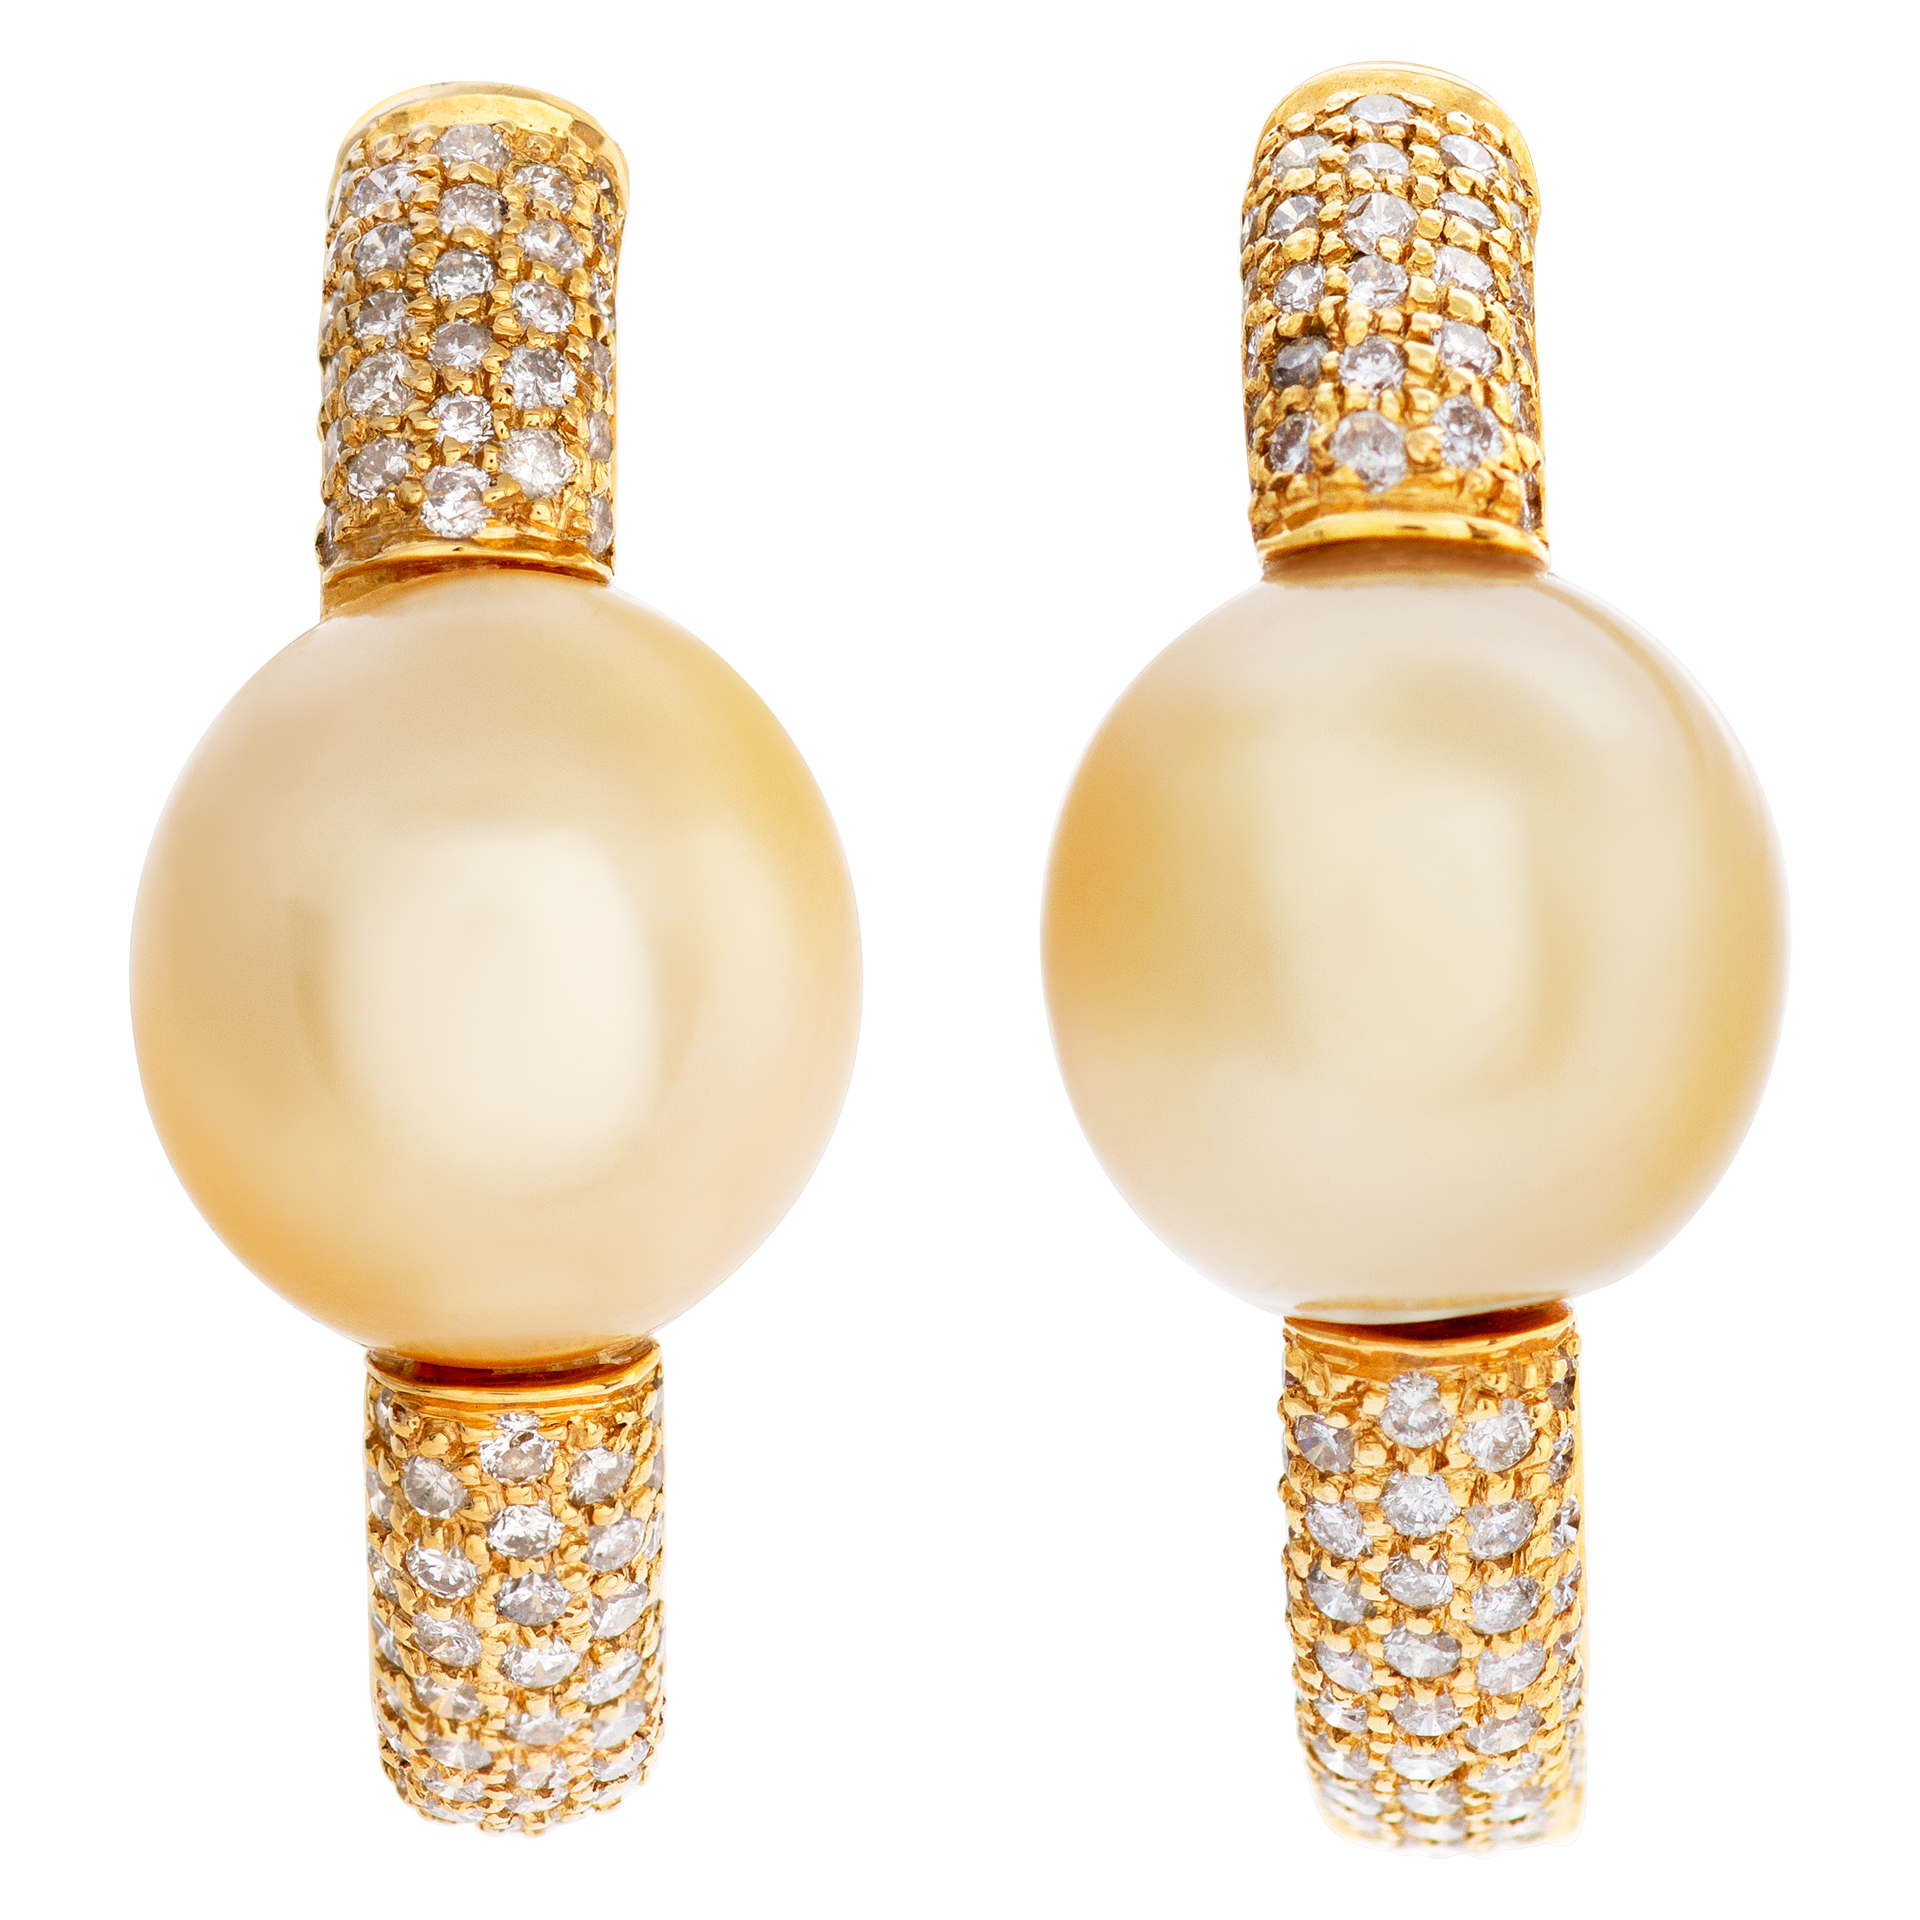 GOlden South Sea parls (11.5 x12mm) & diamonds hoops earrings set in 18K yellow gold.